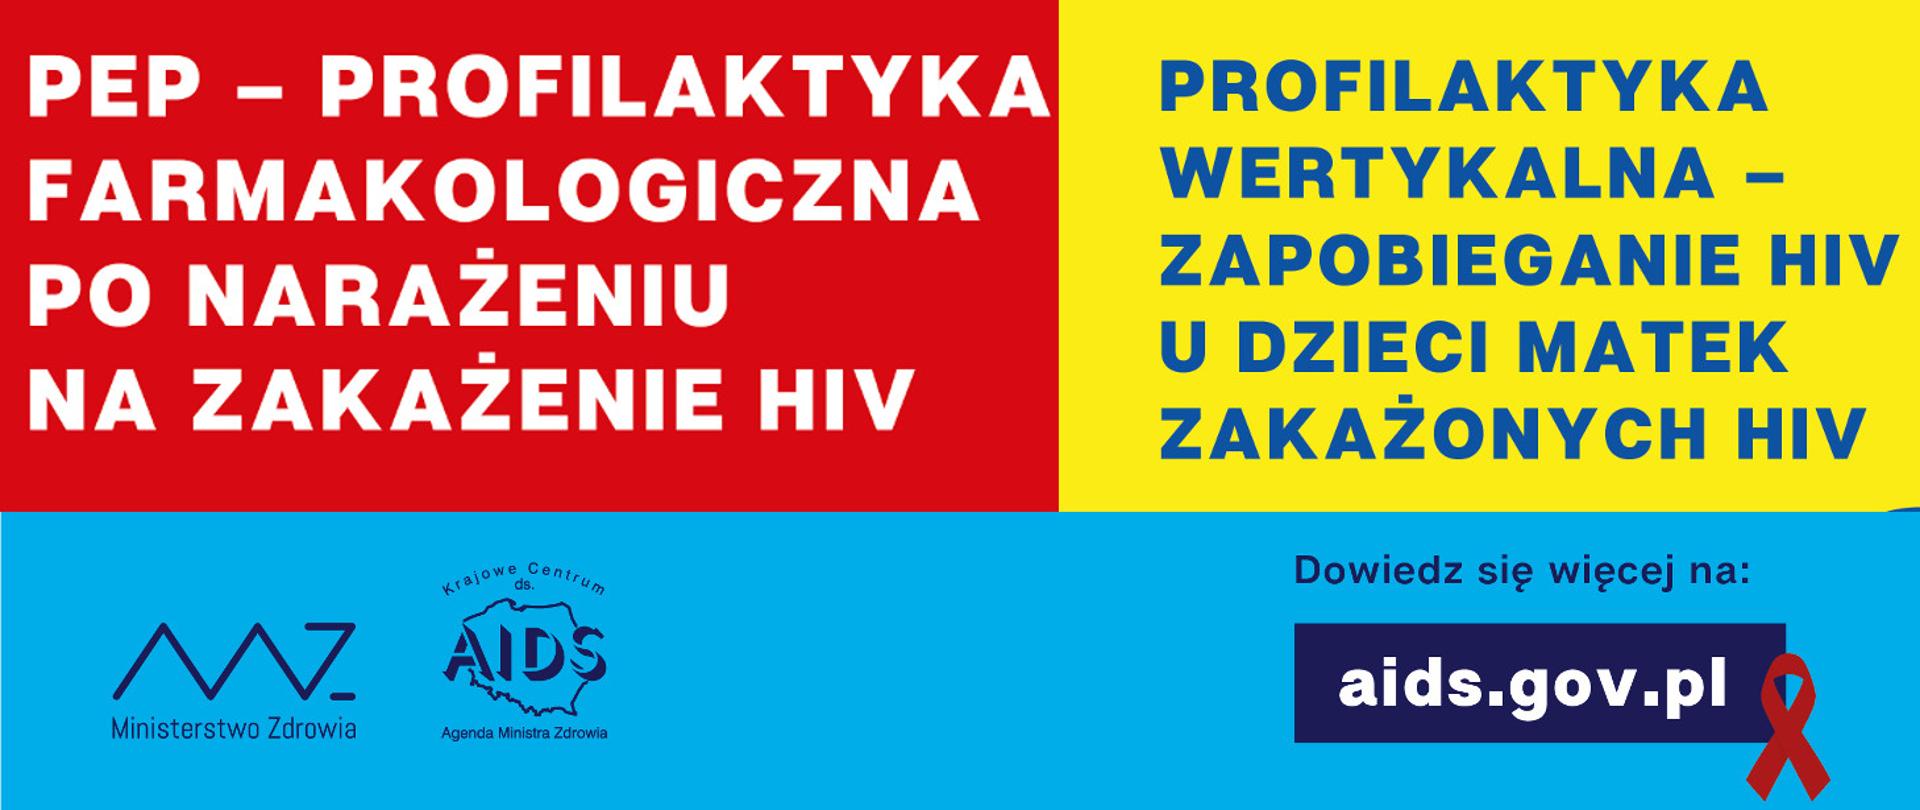 Kampania o profilaktyce HIV